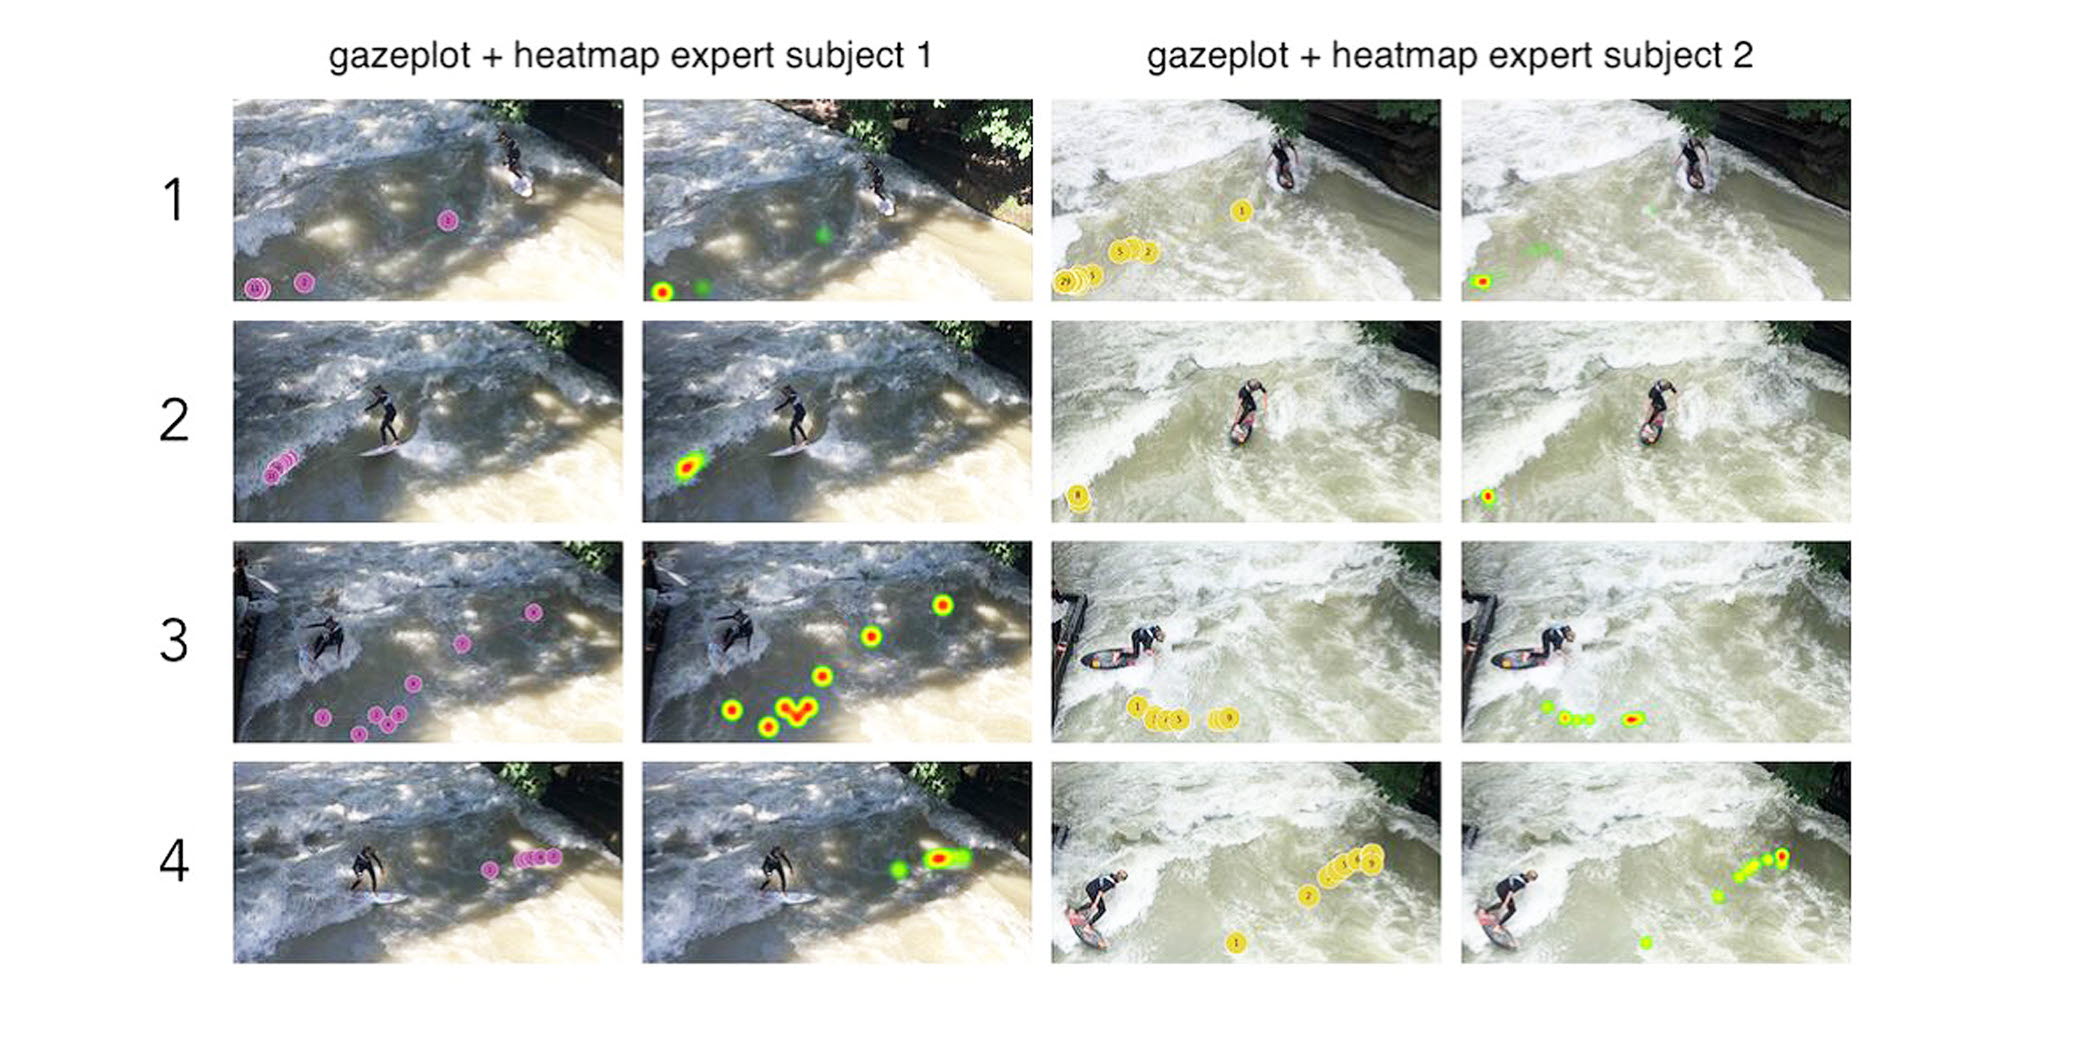 Gazeplots and heatmaps visualizing gaze behavior of  two expert surfers.